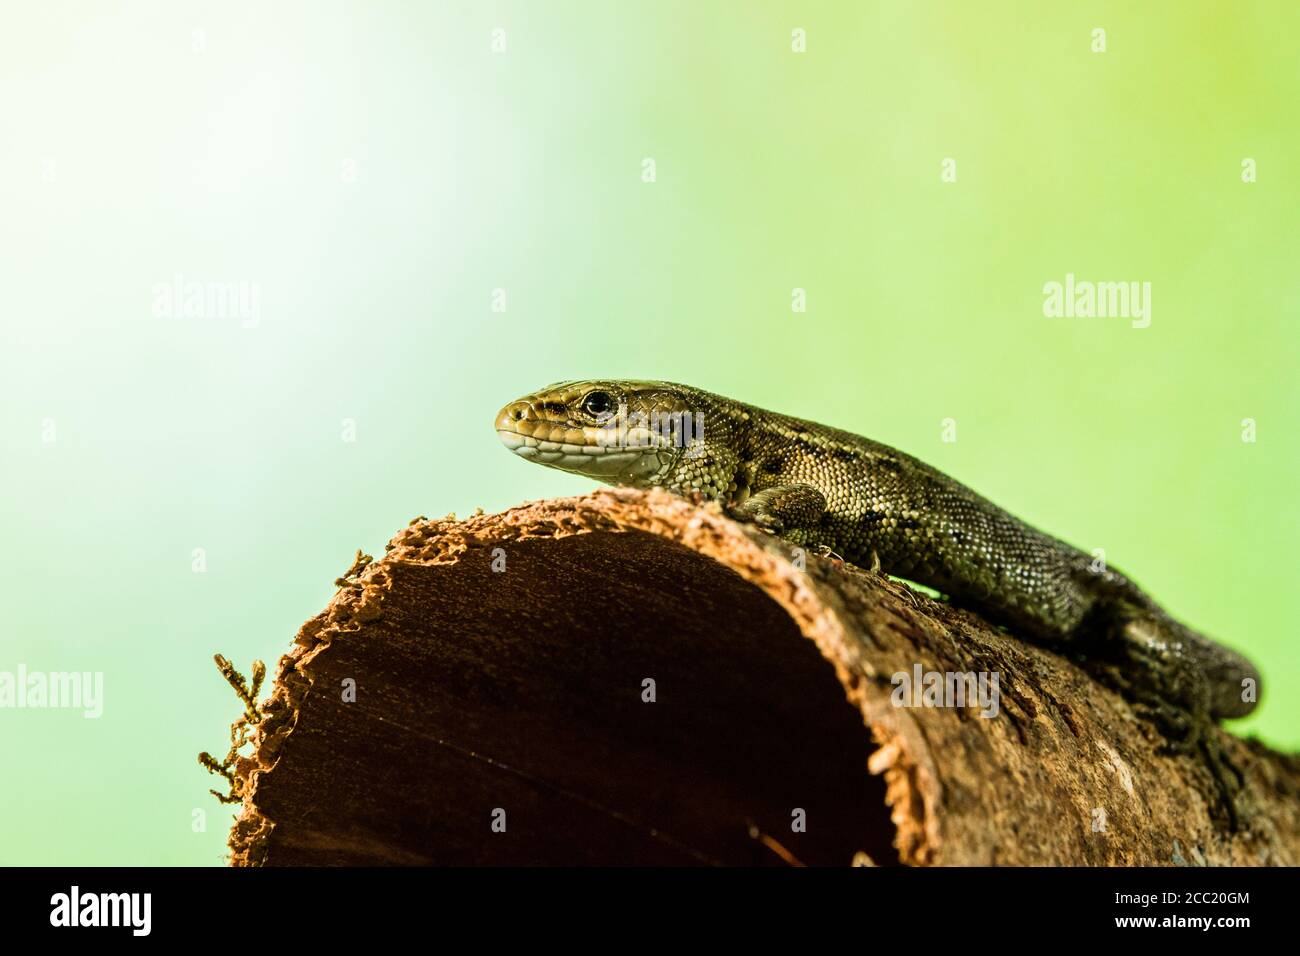 Un lagarto común fotografiado en circunstancias controladas y liberado ileso Foto de stock